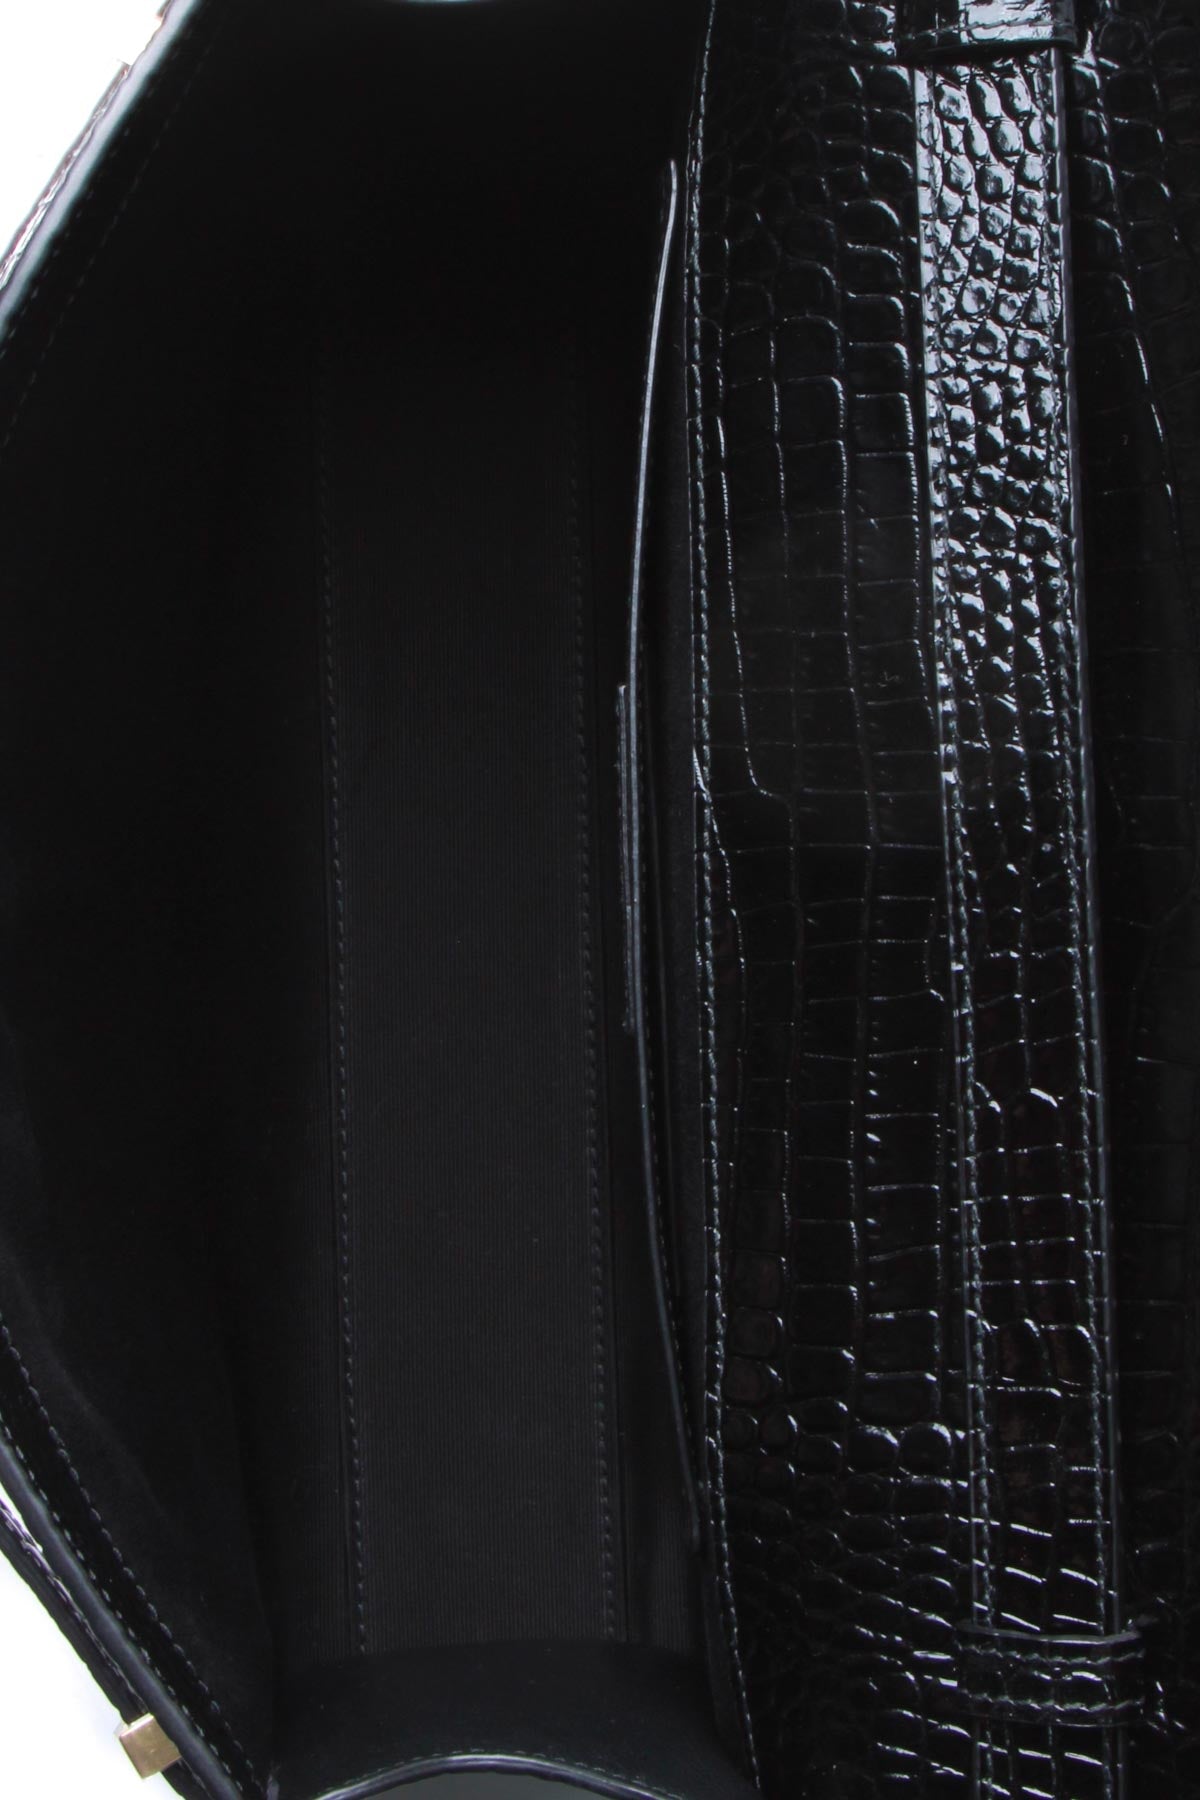 Manhattan small shoulder bag in shiny crocodile-embossed leather, Saint  Laurent